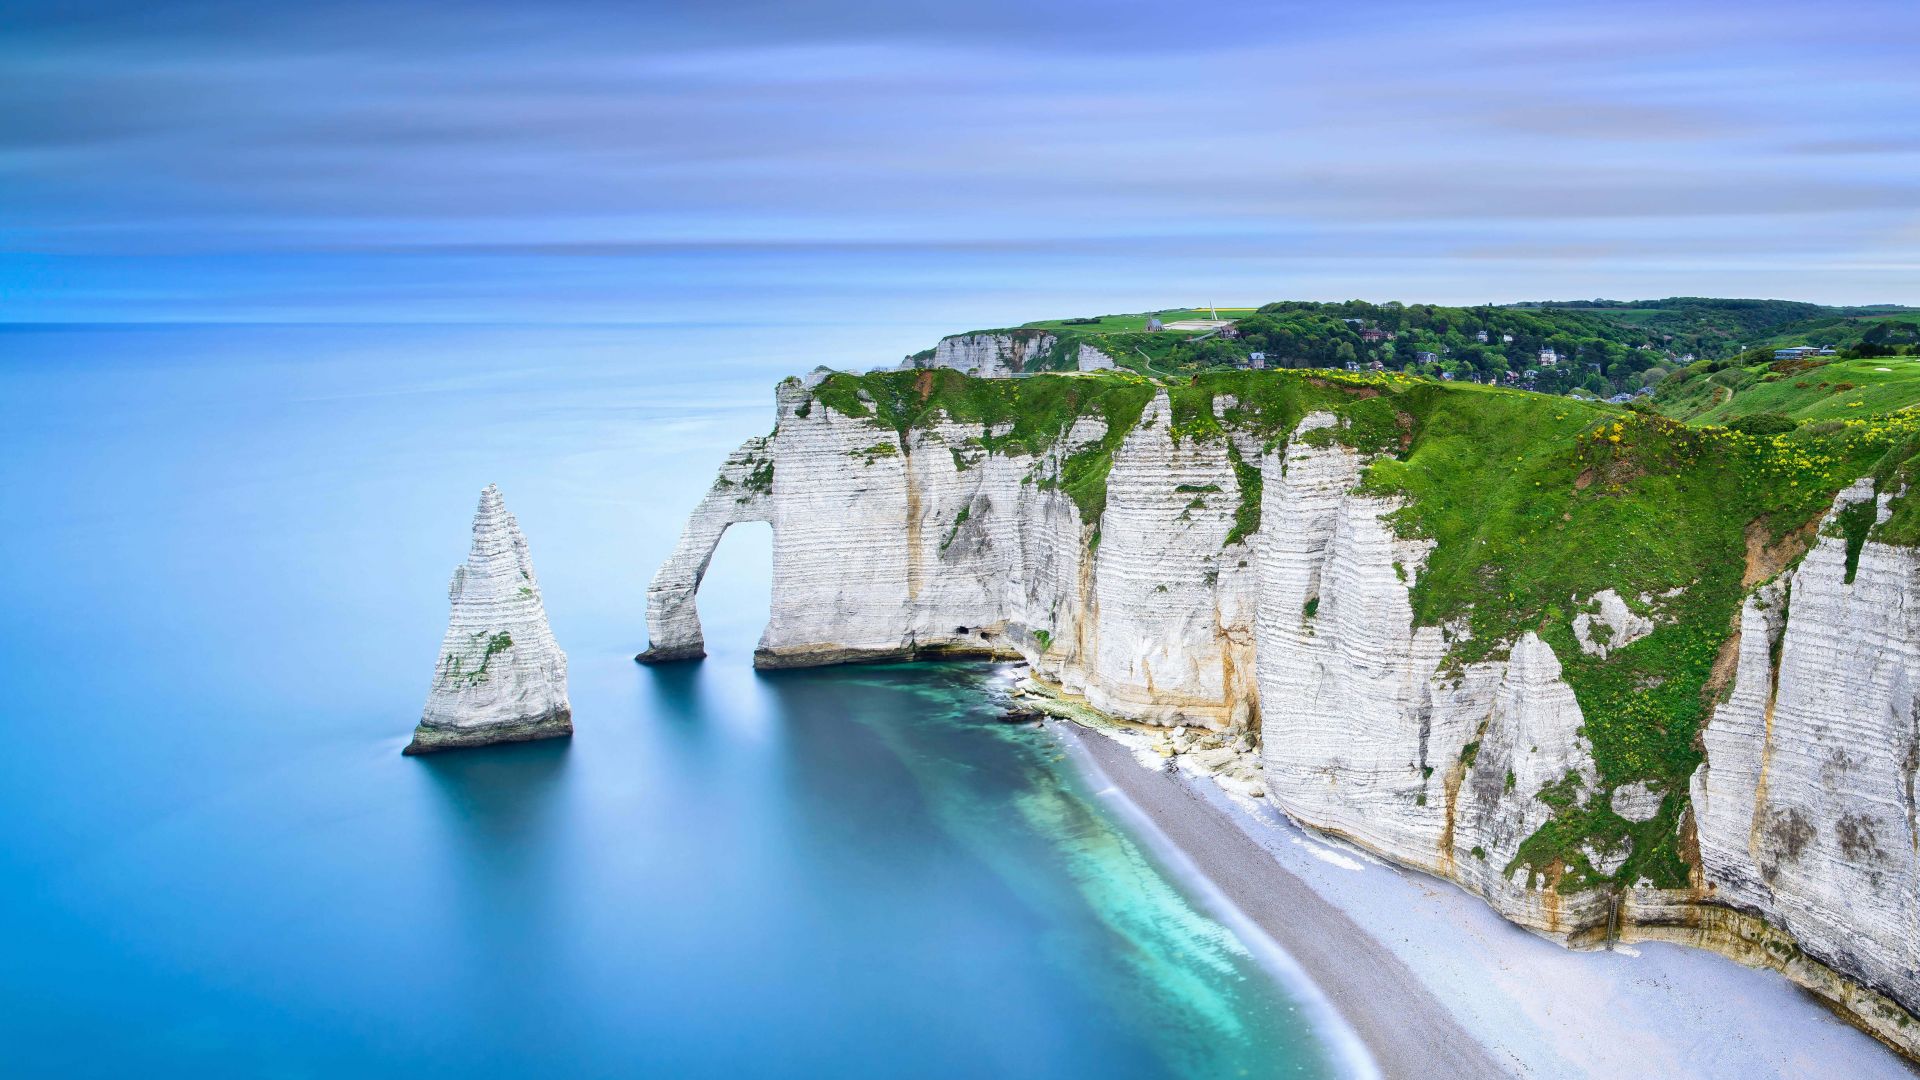 Chemin des Douaniers, Normandy, France, beach, rocks, ocean, water, mountains, 4K (horizontal)